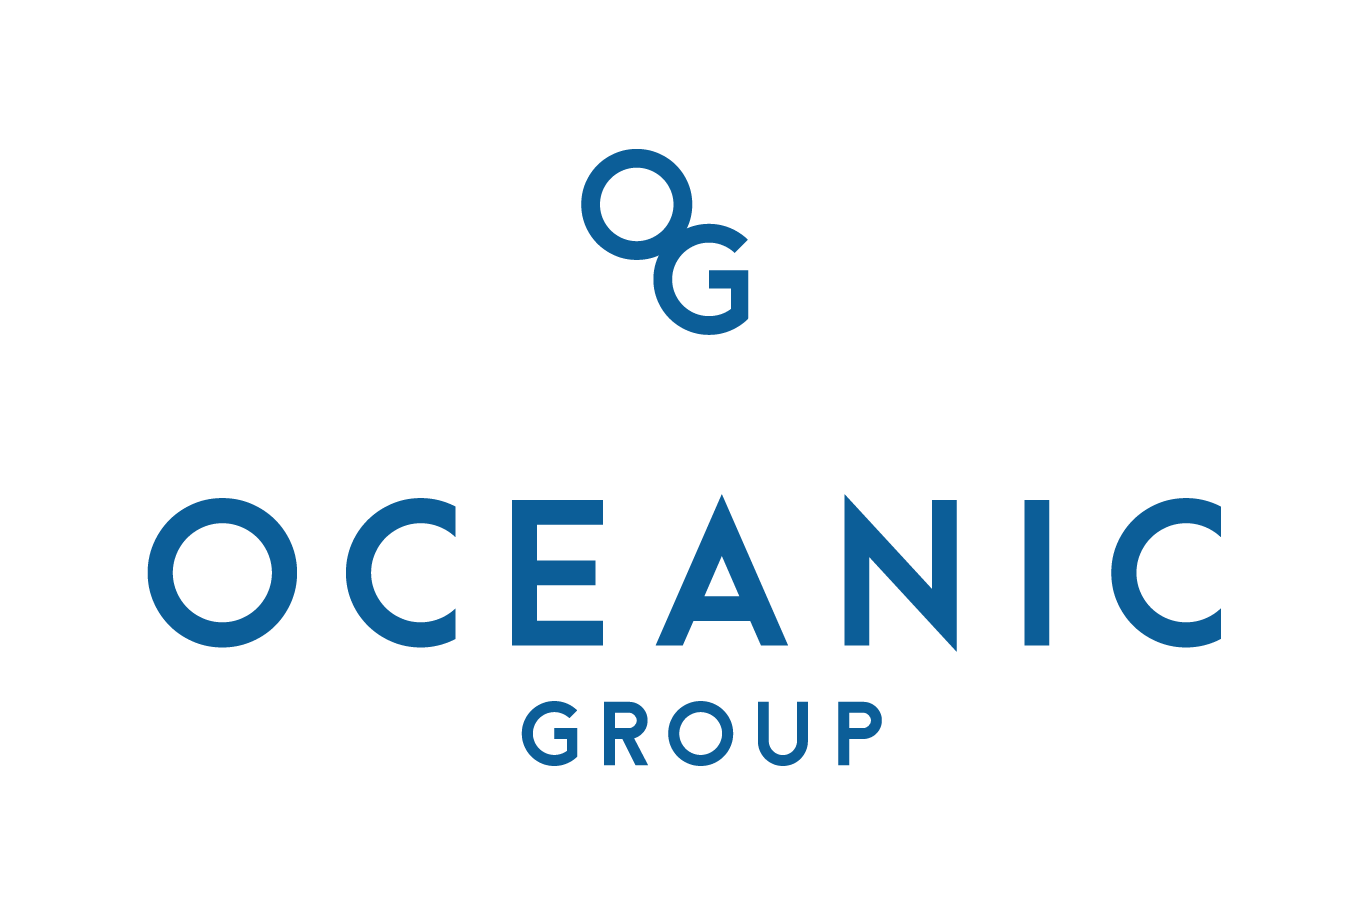 Oceanic Group